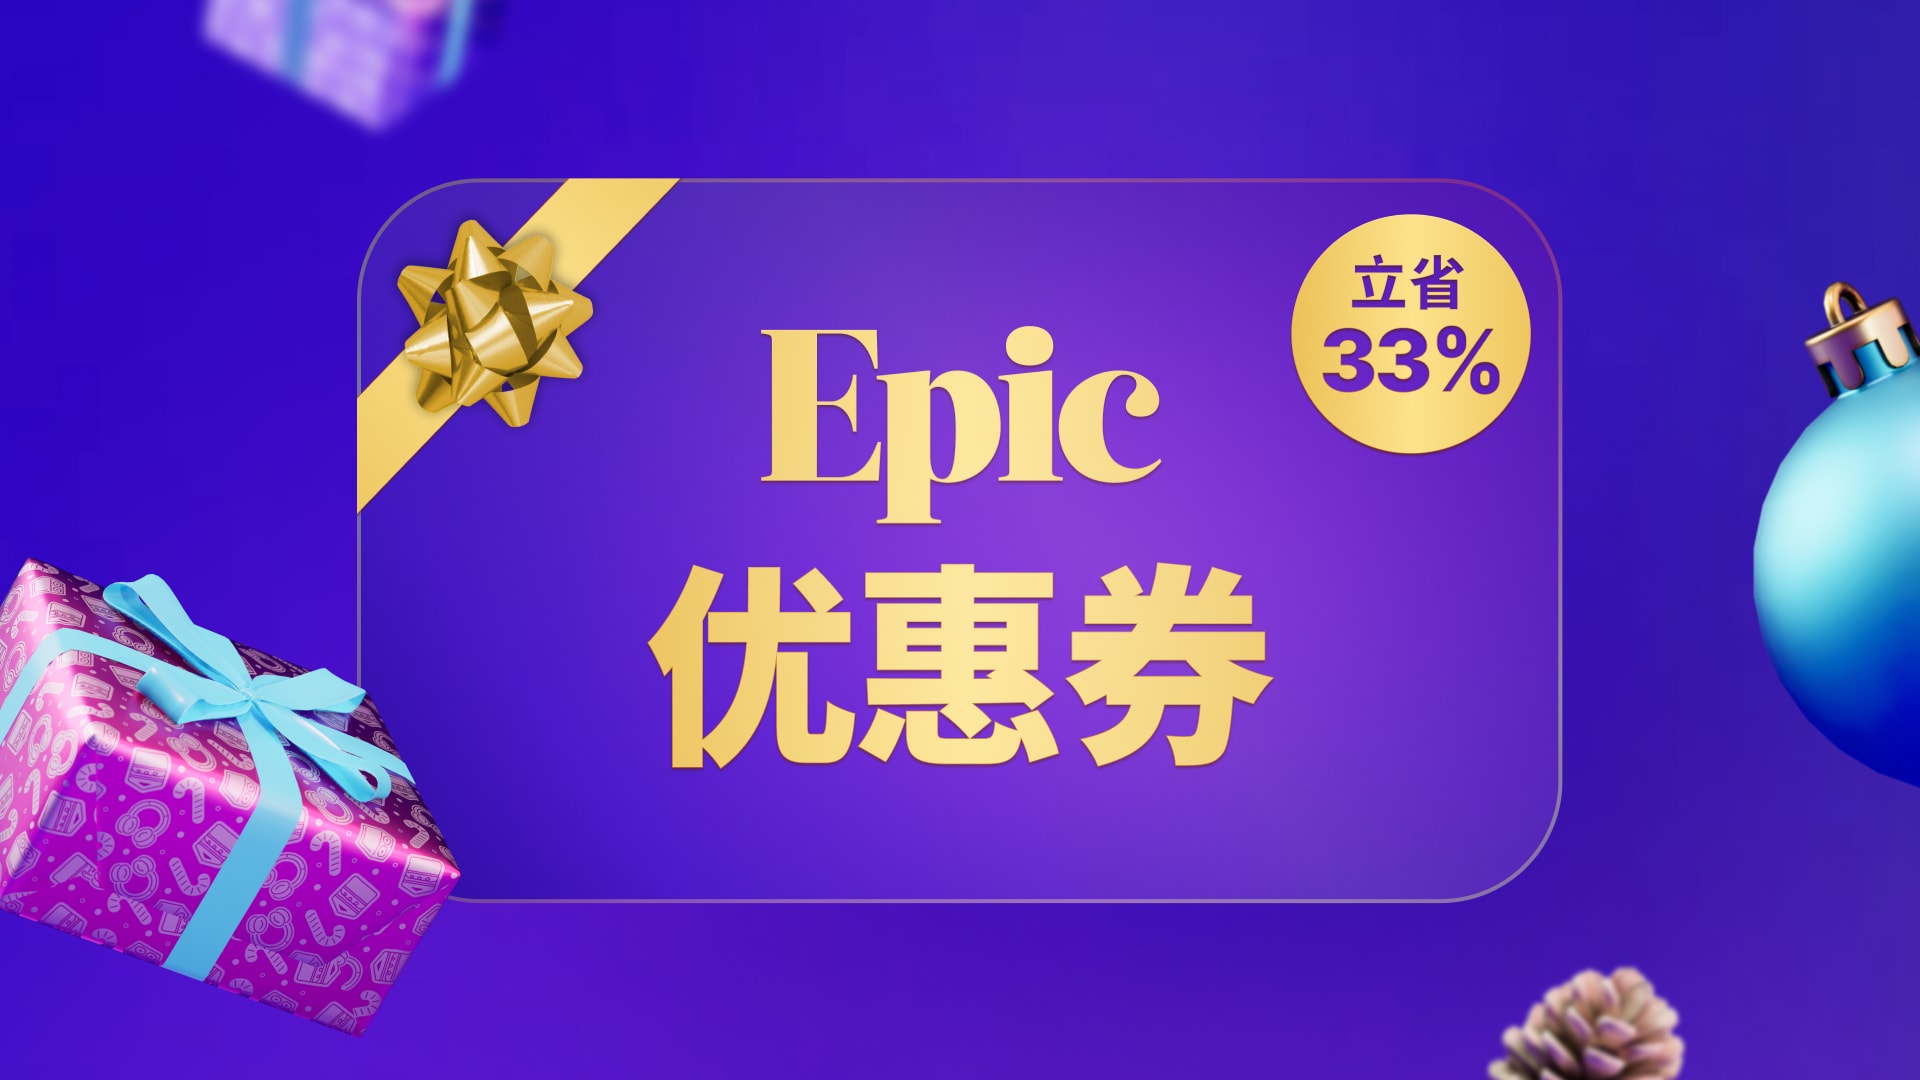 Epic游戏商城开启“假日特卖”活动